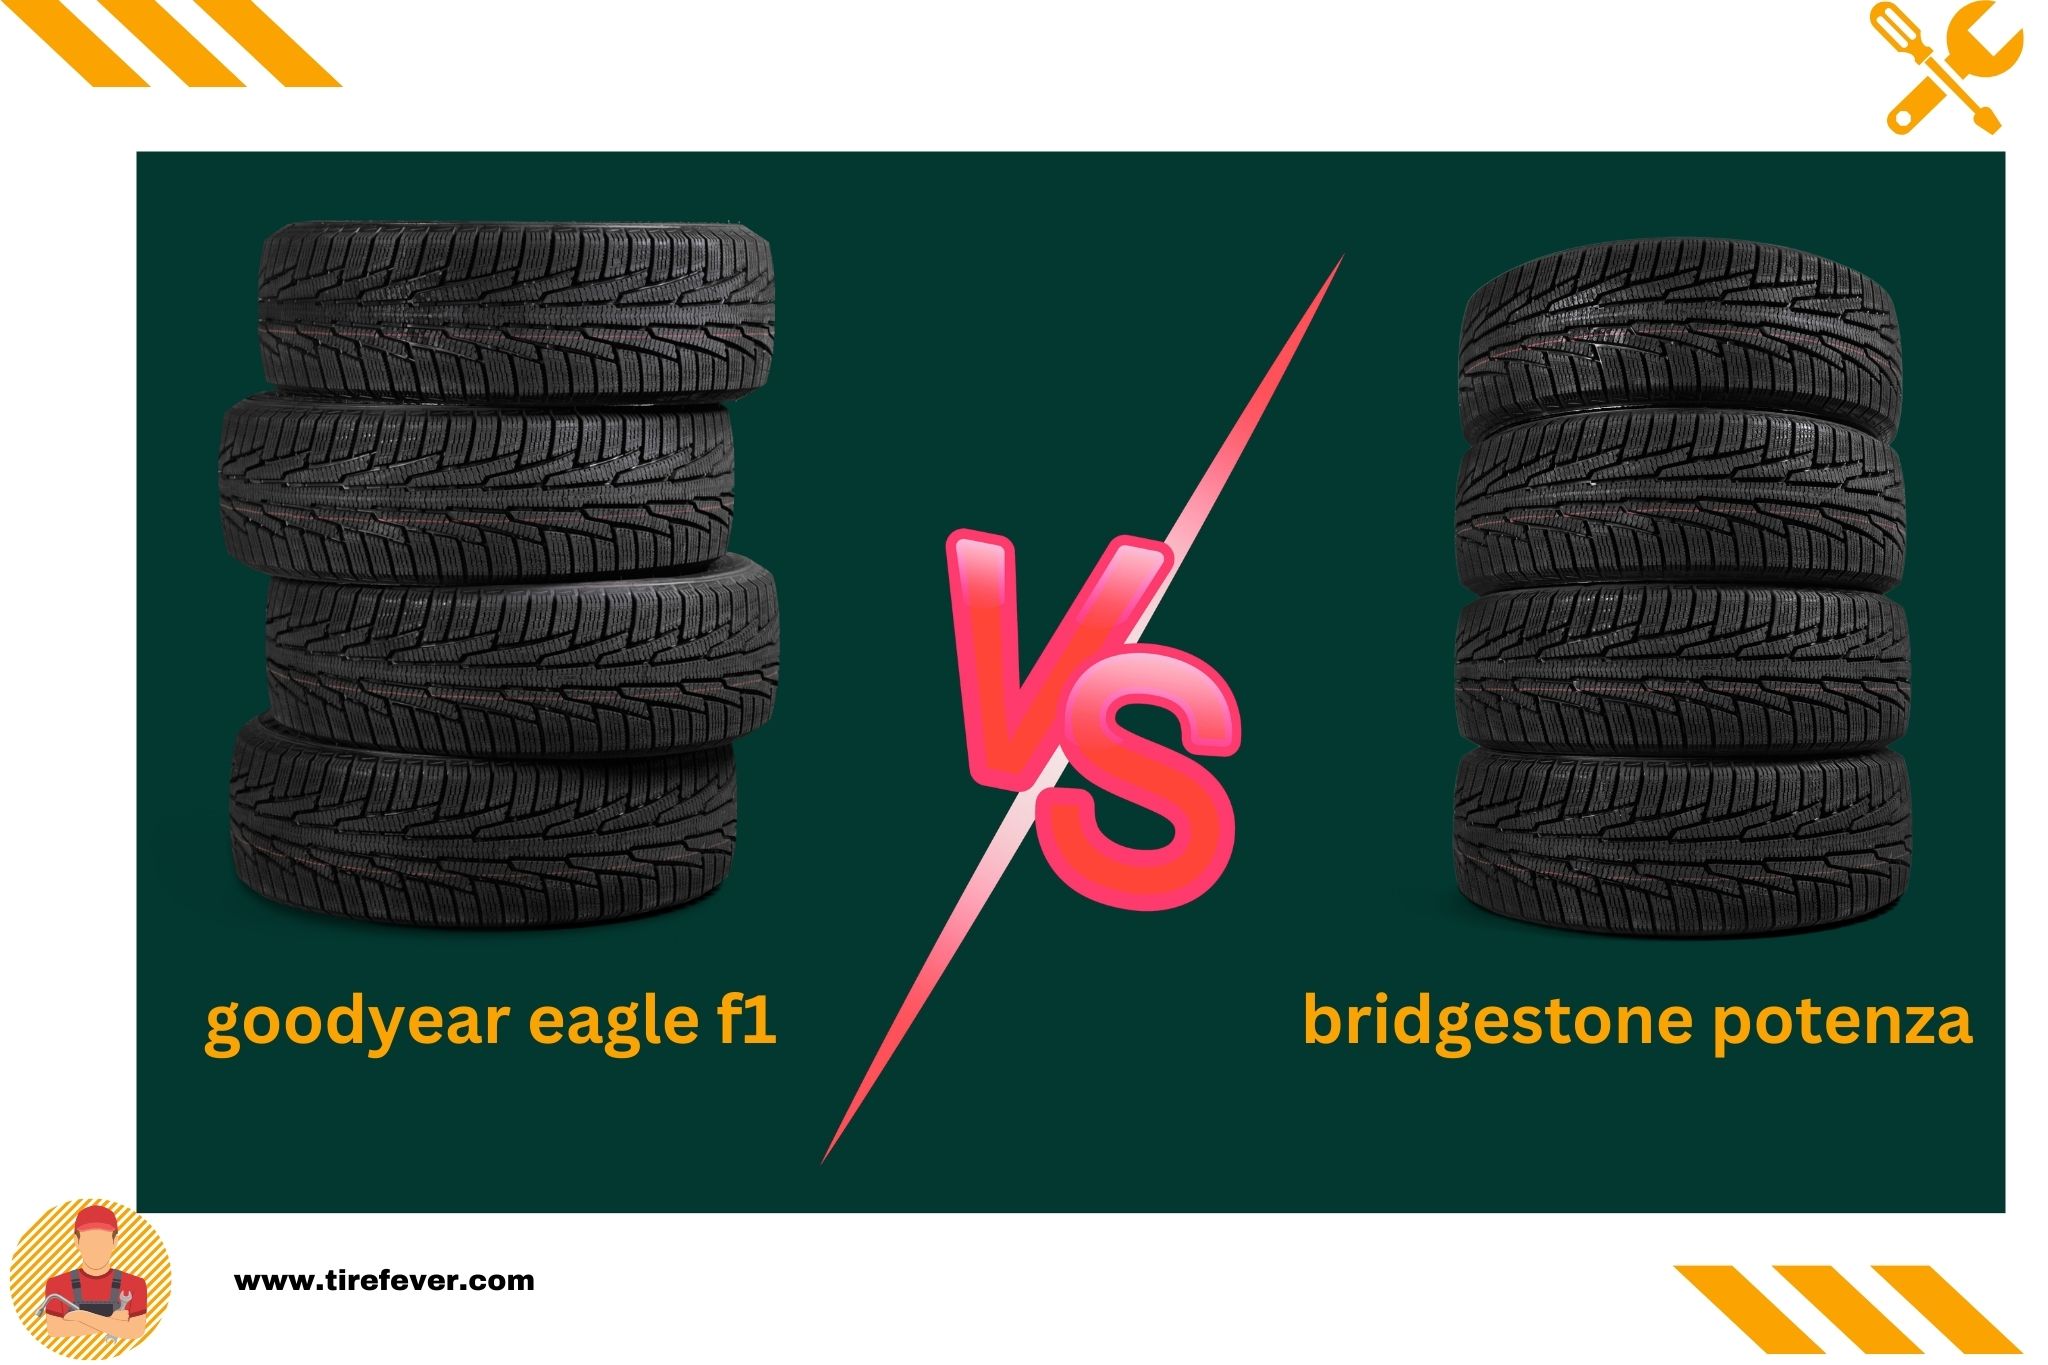 goodyear eagle f1 vs bridgestone potenza